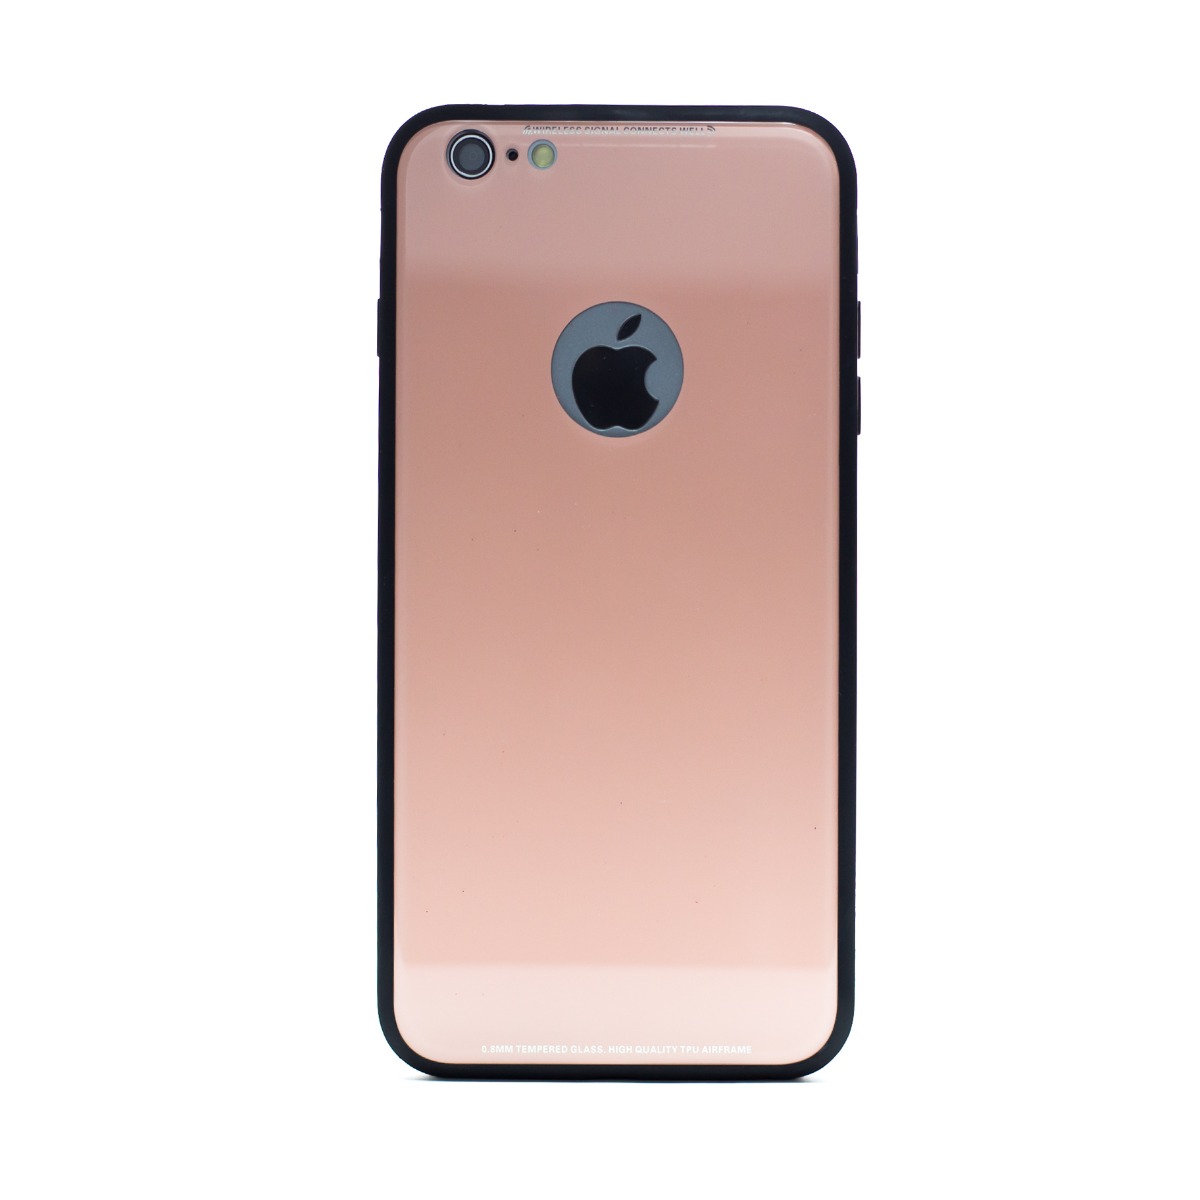 Husa spate sticla iPhone 6 Plus Roz iShield thumb